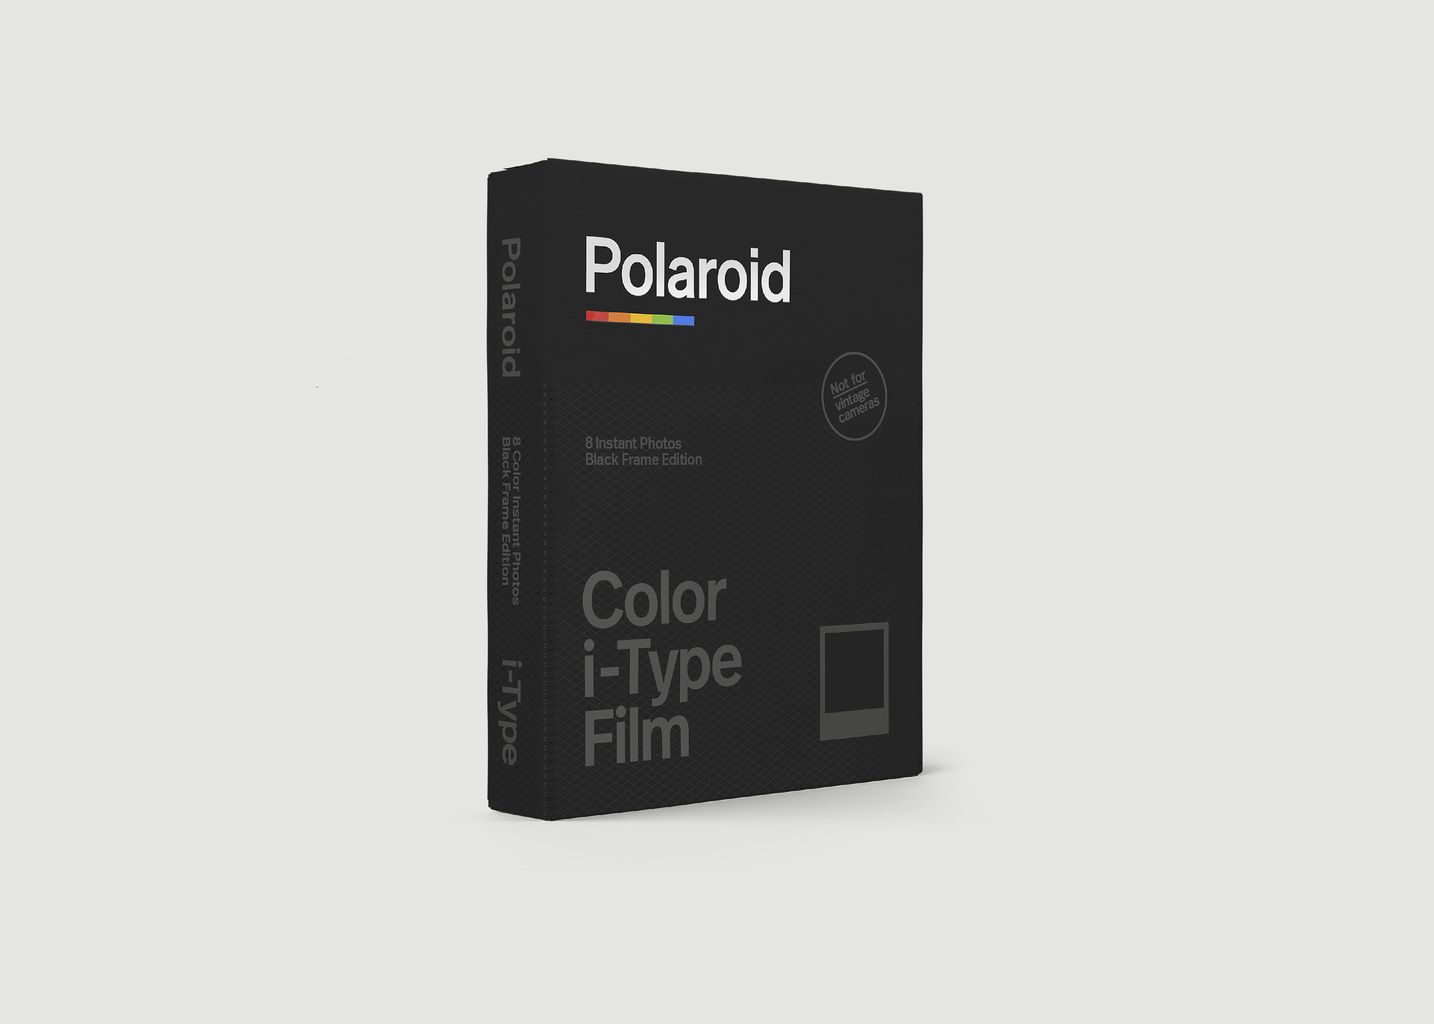 Polaroid Film Color I Type Black Frame Edition Color